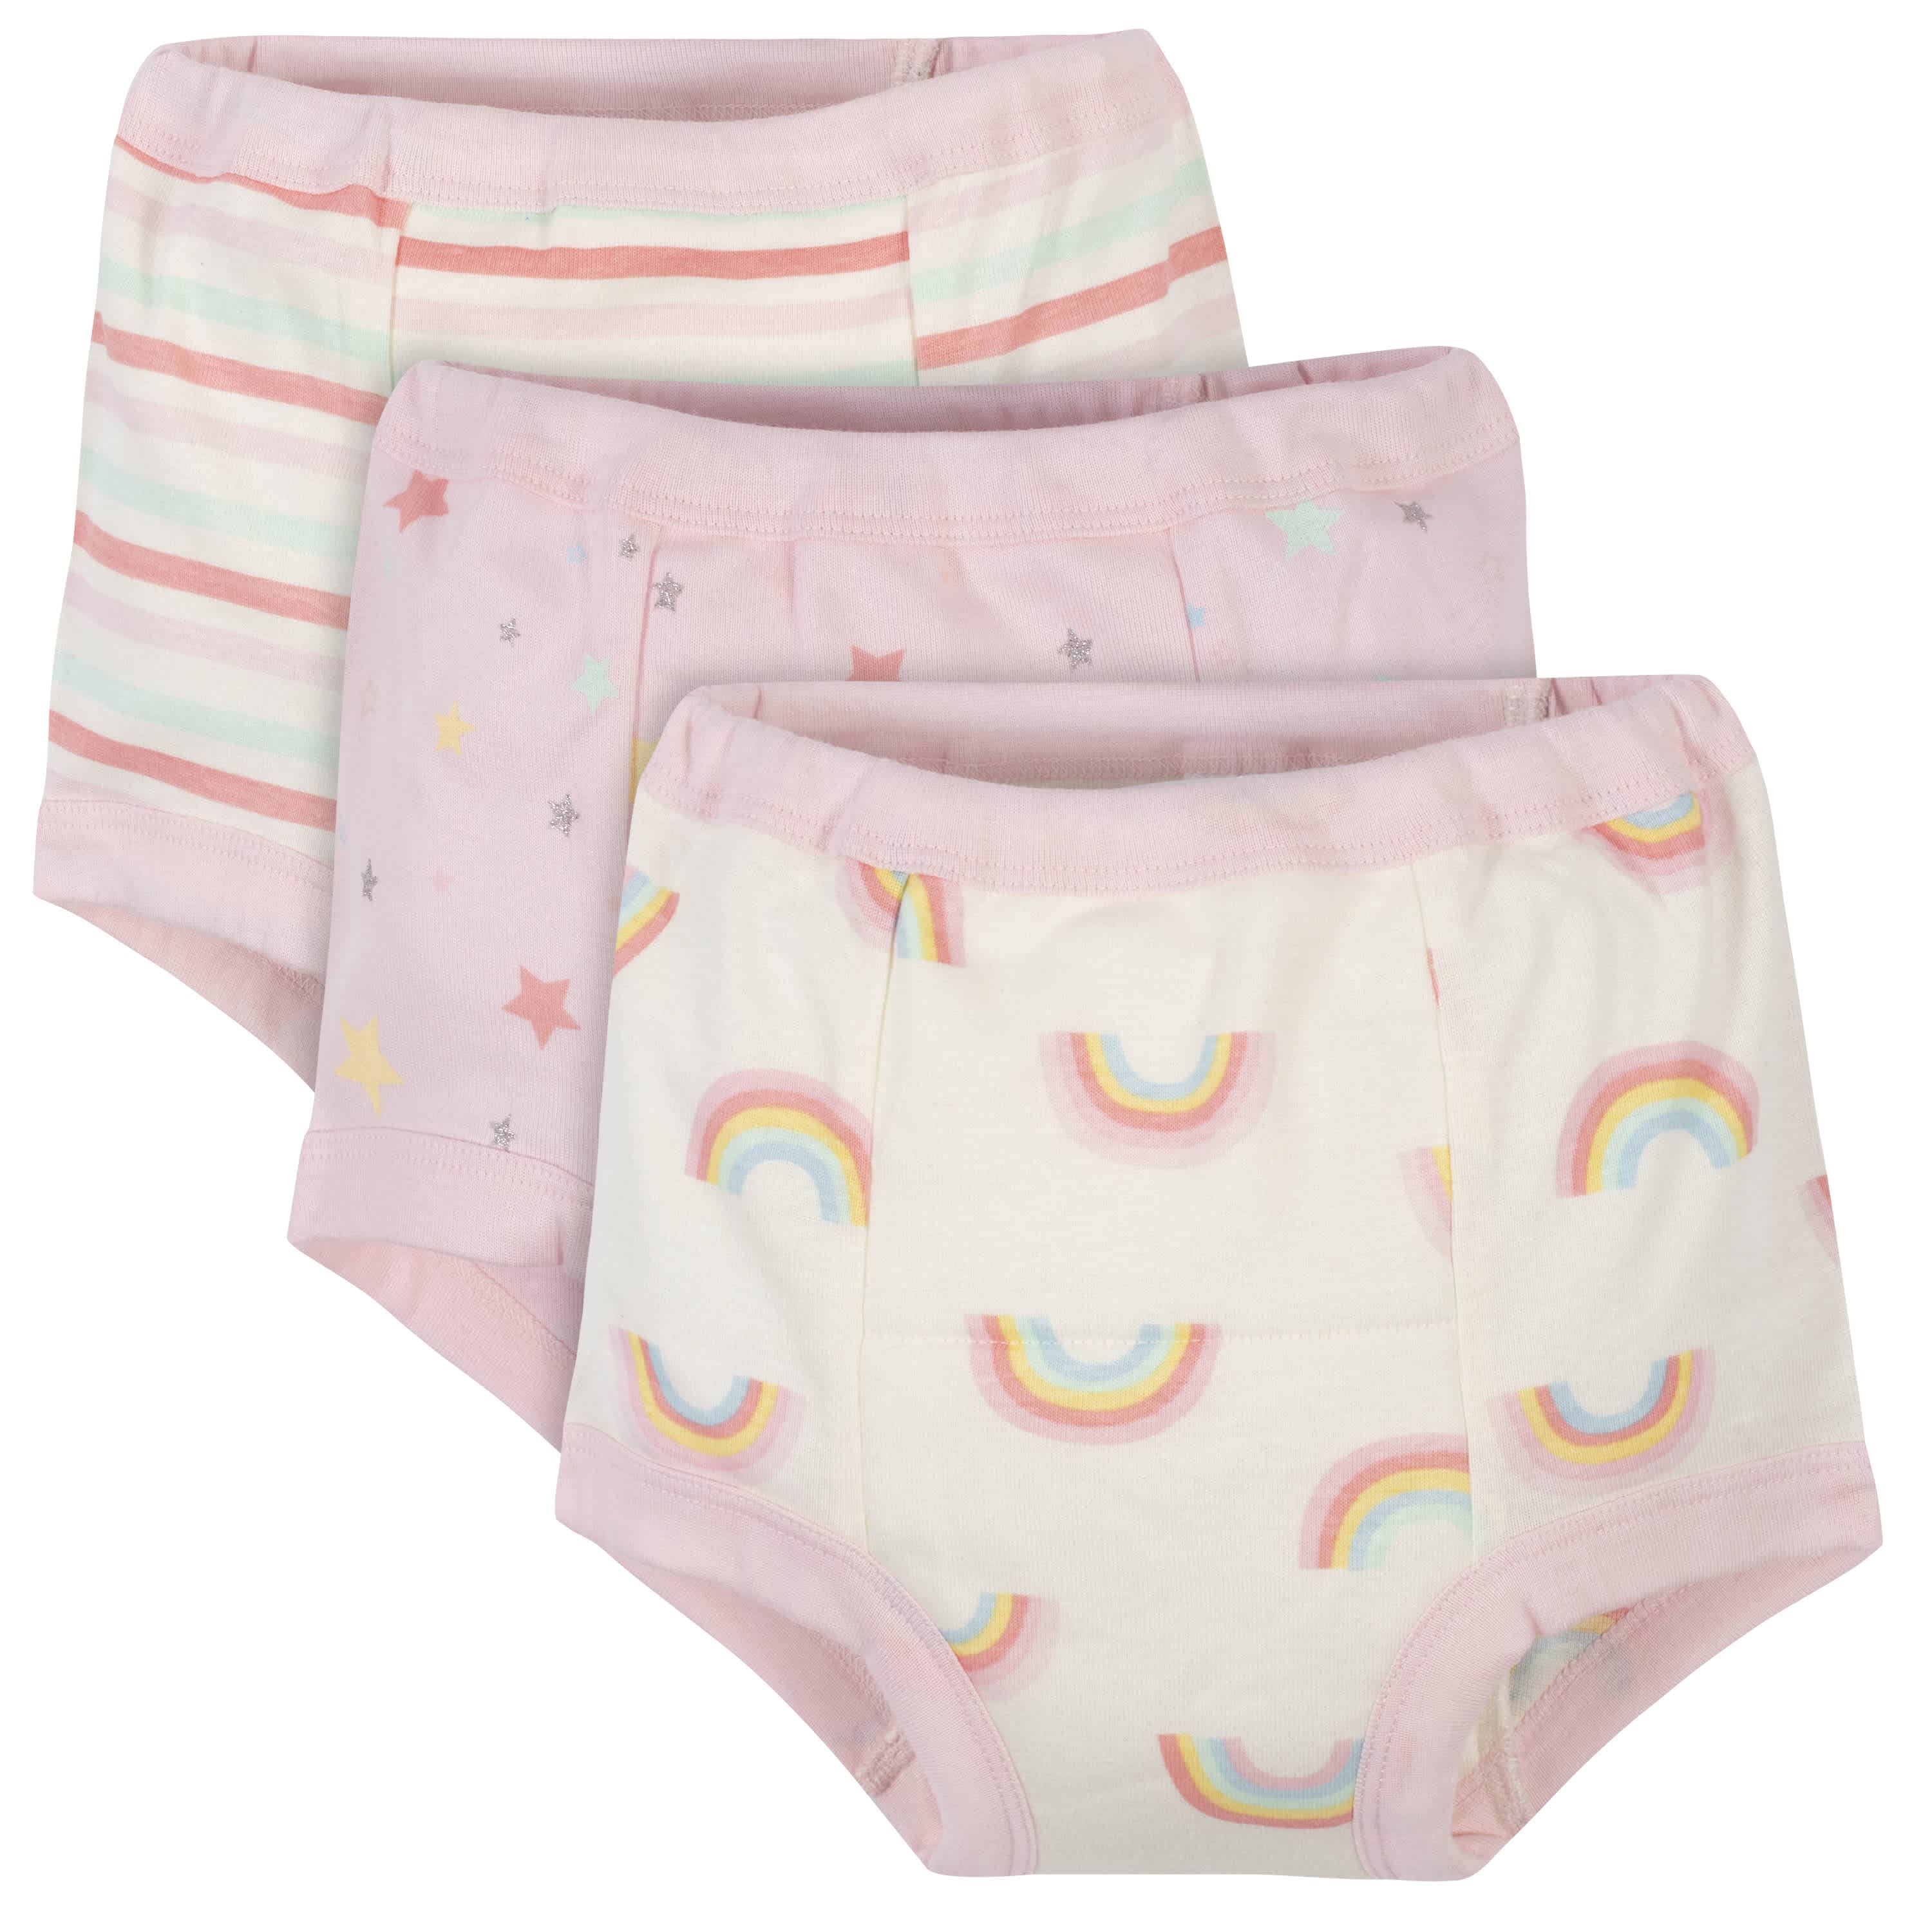 6 Pack BIG ELEPHANT Girls' Padded Training Pants Pure Cotton Underwear